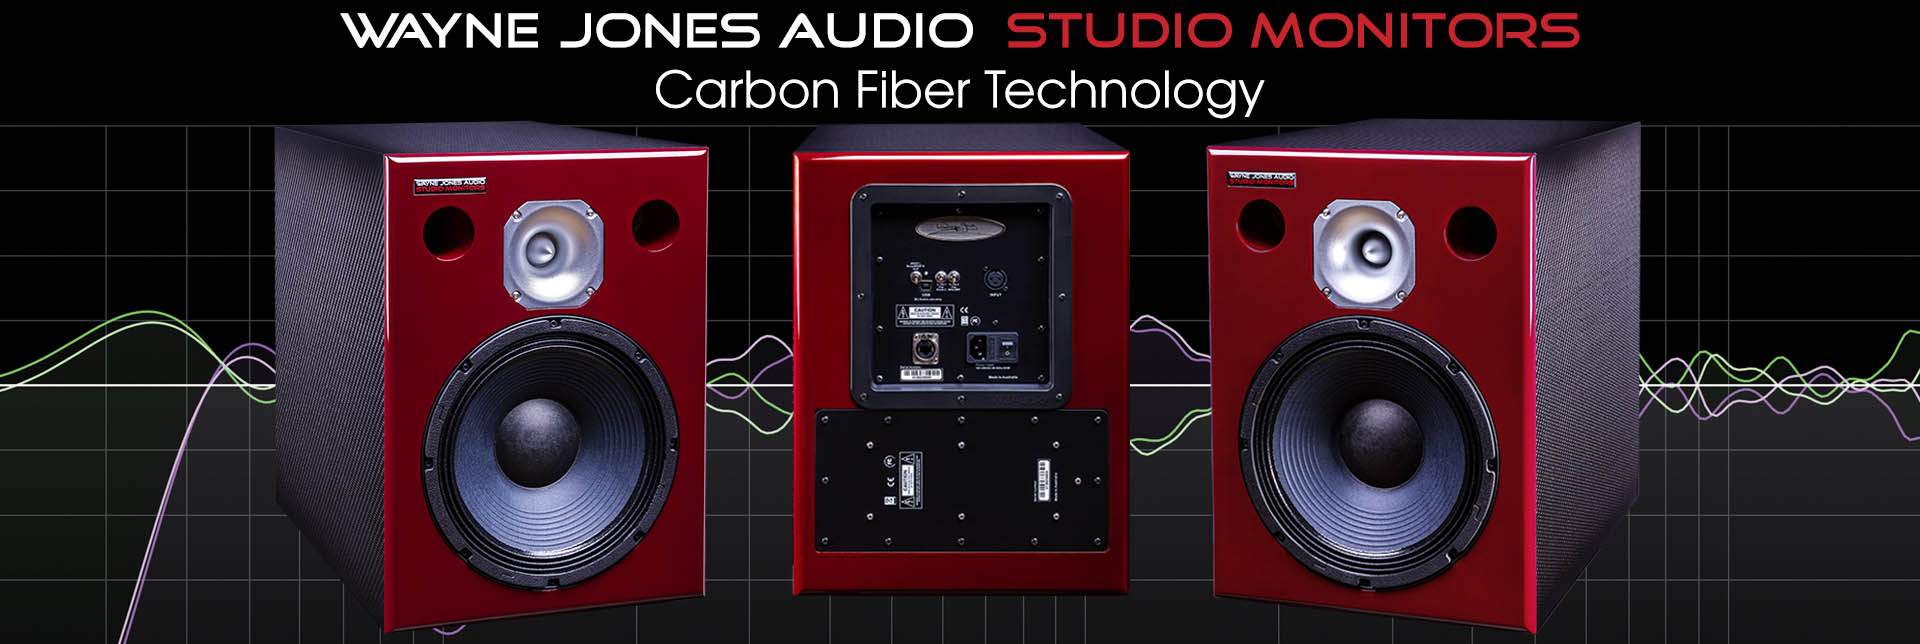 Wayne Jones Audio Carbon Fiber Studio Monitors - 10" 650 watt each recording engineering, audio and film post production, sound track mastering, audio mixing, sound mixing, recording studio gear.